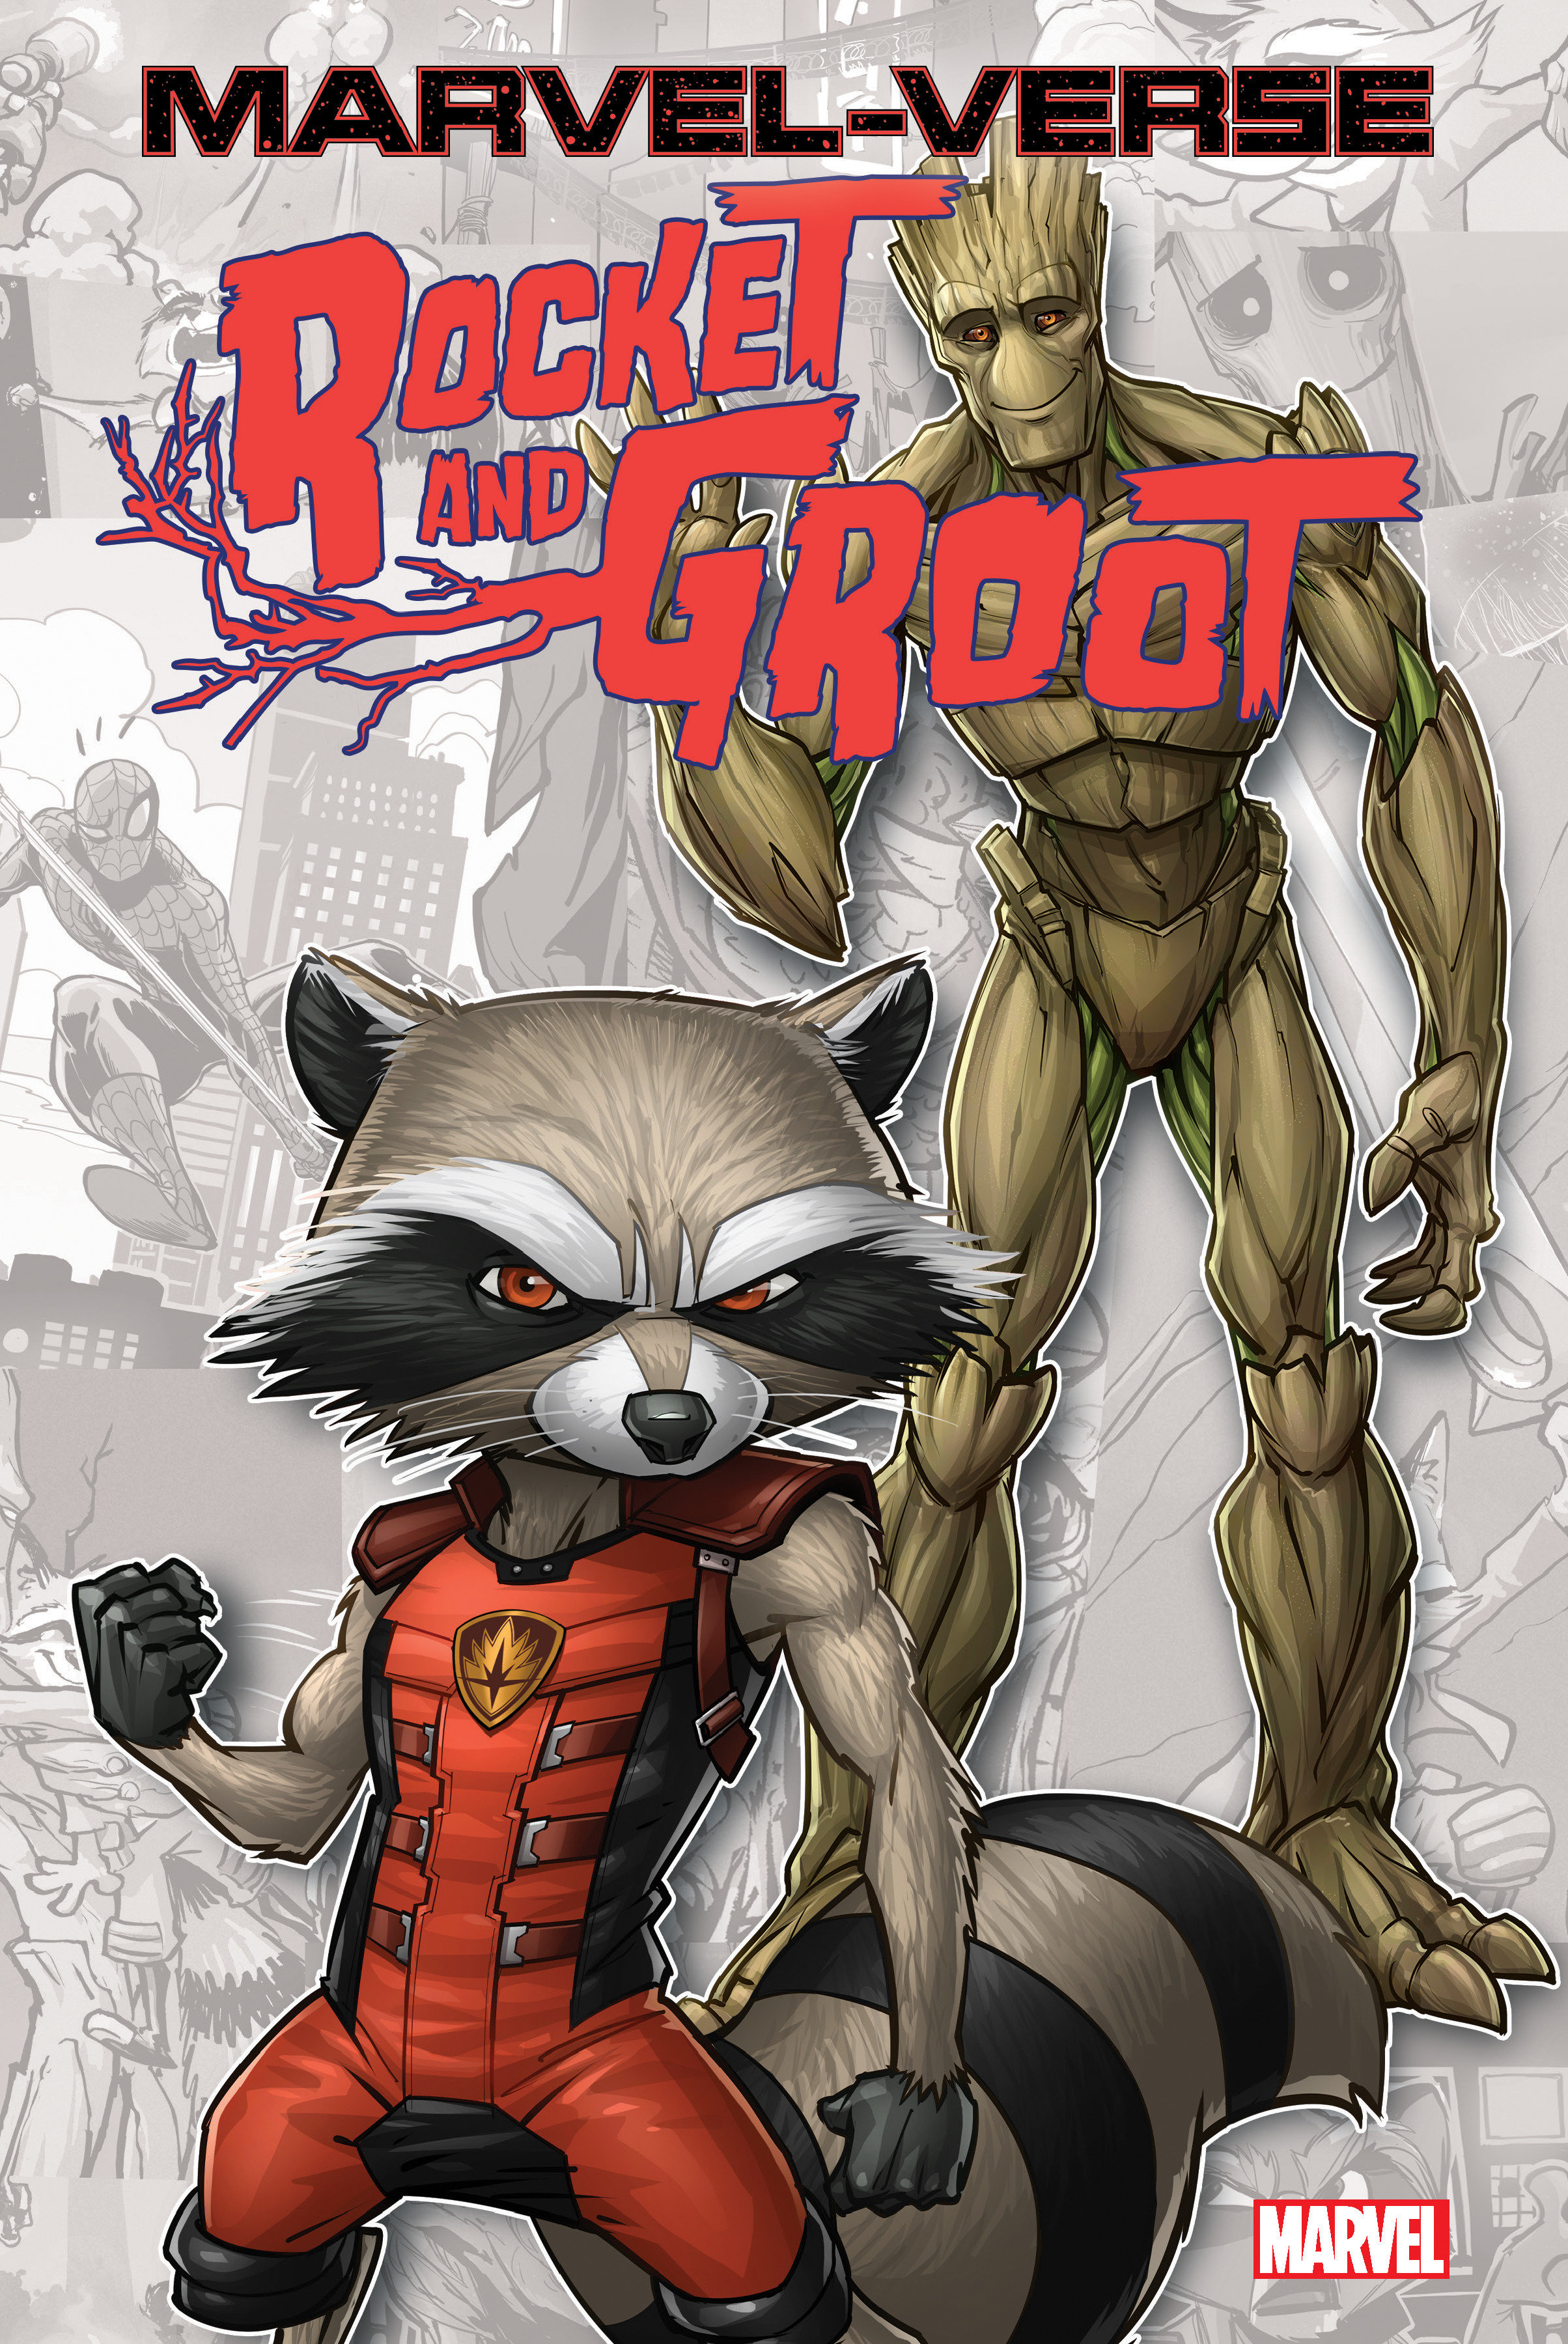 Marvel-Verse Graphic Novel Volume 27 Rocket And Groot